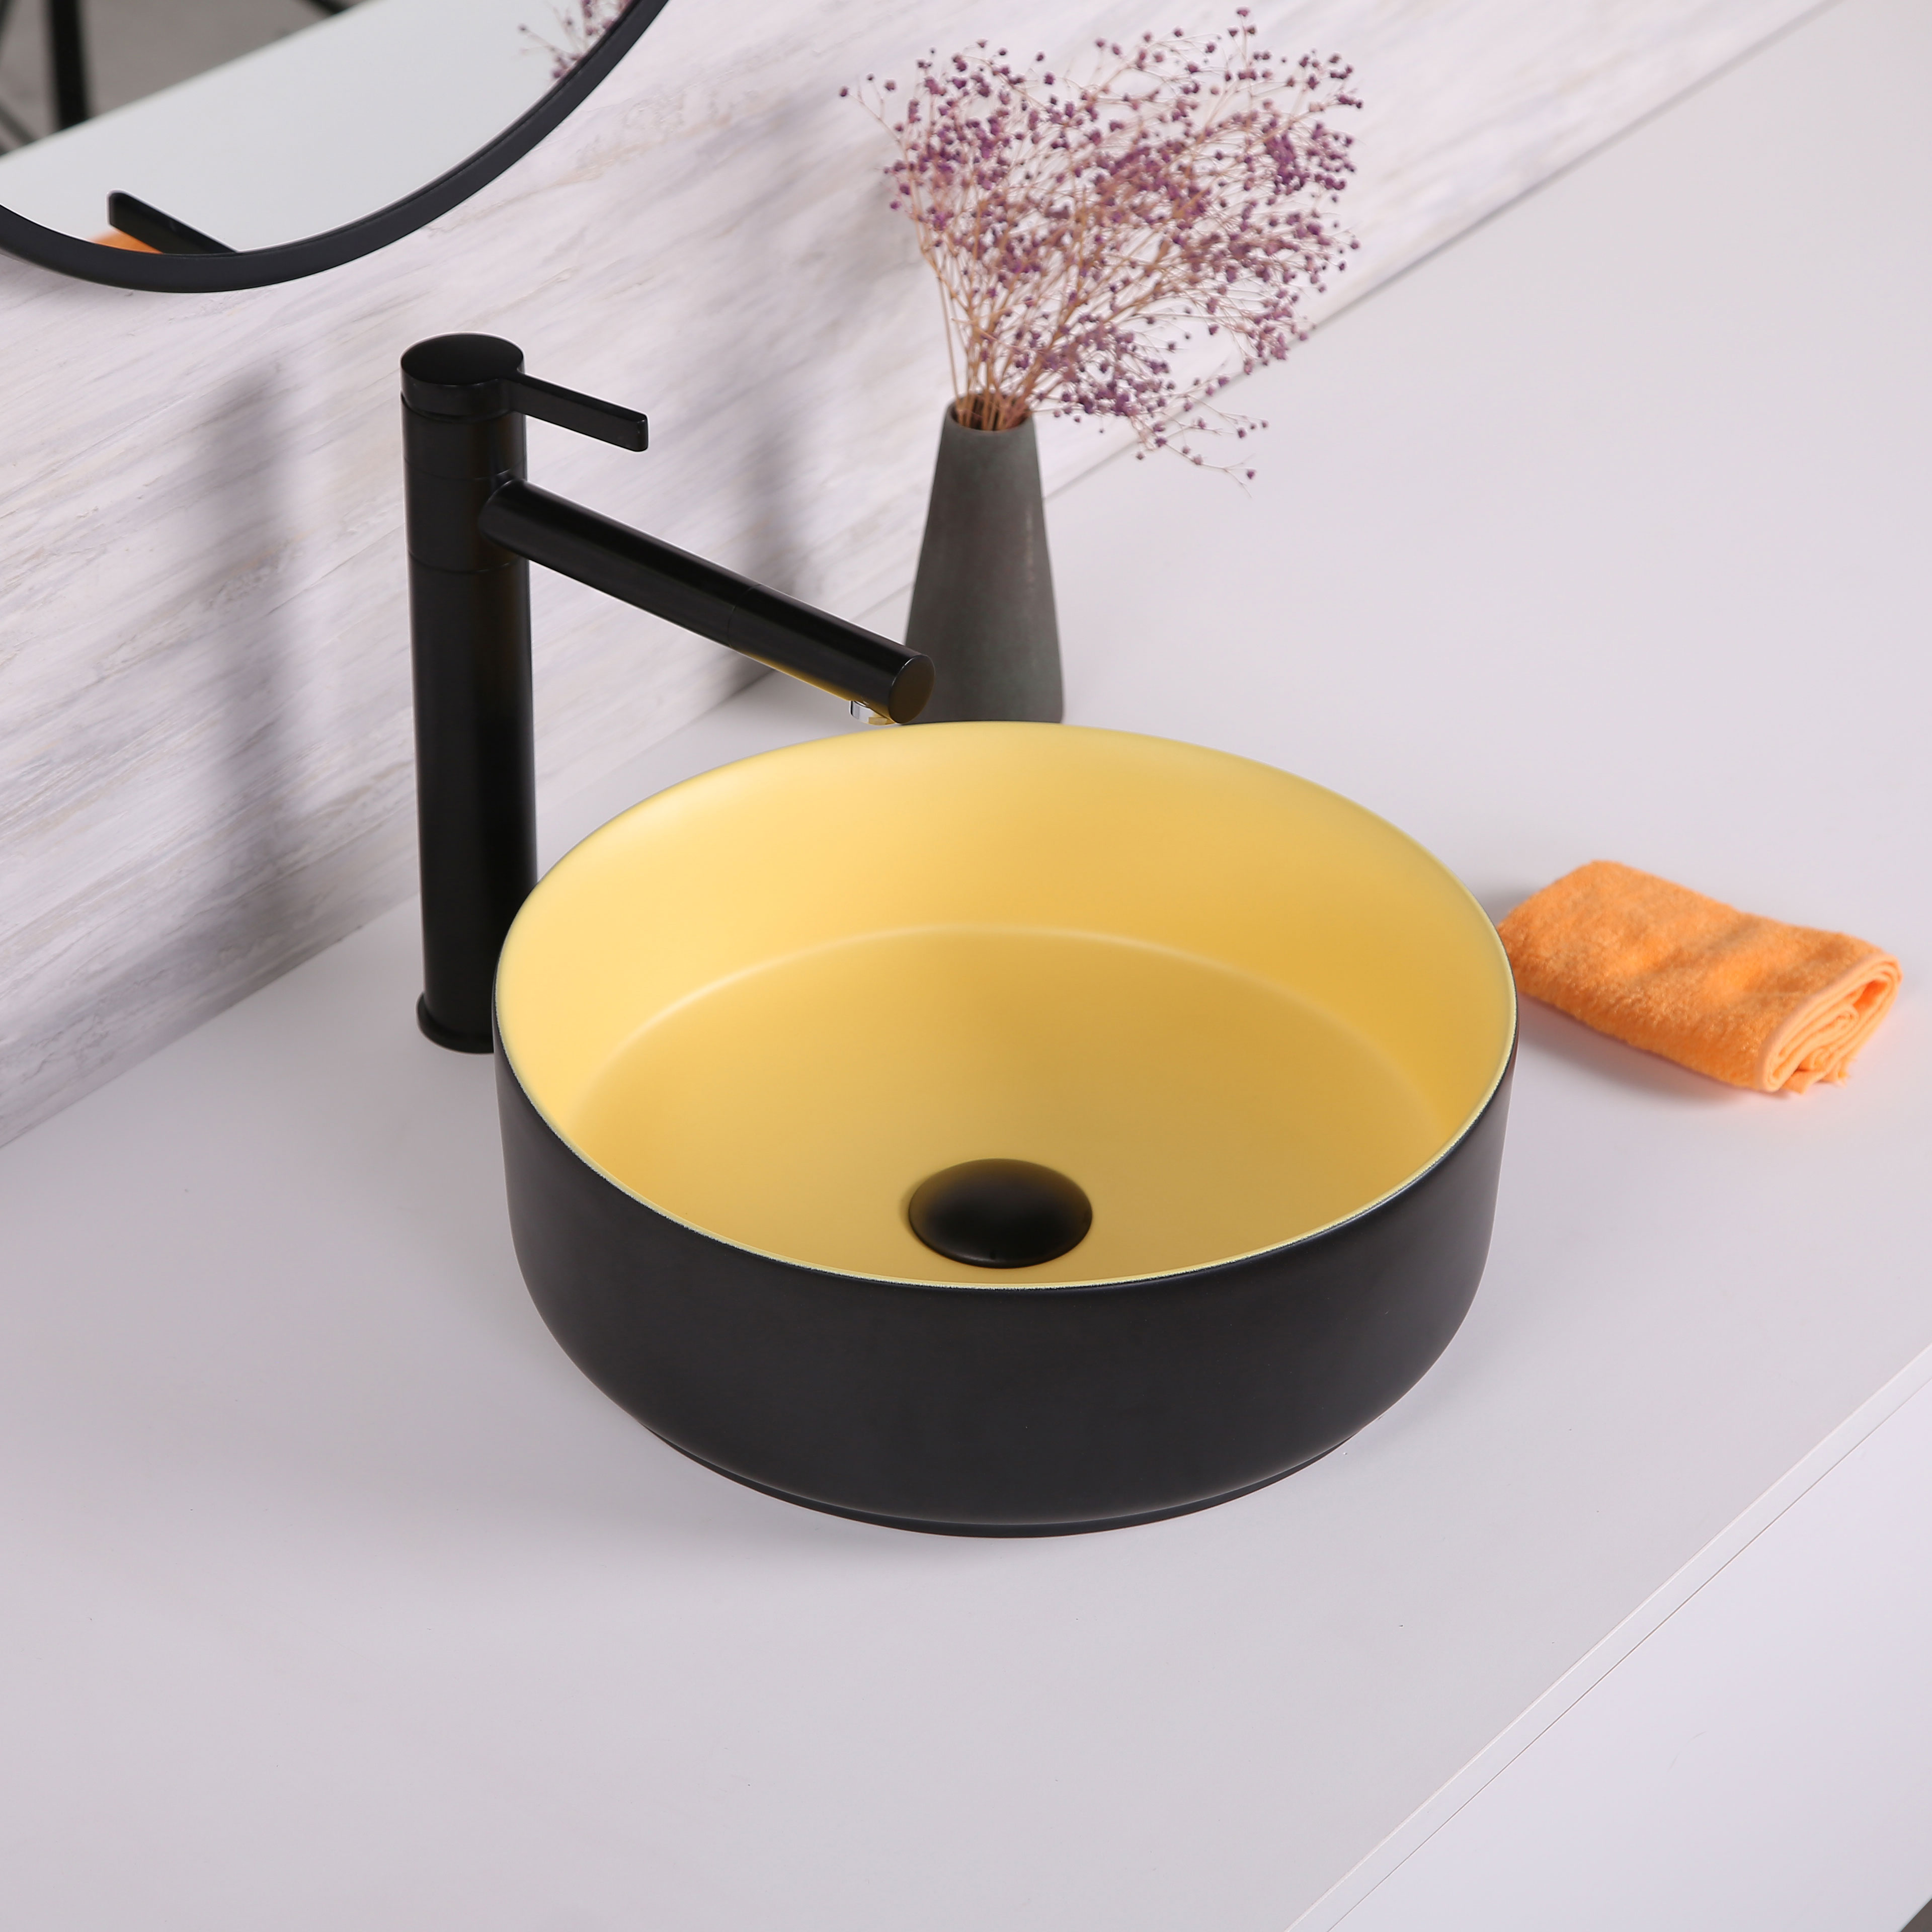 Matt Color Small Size Sink Ceramic Art Round Shape Counter Top Basin